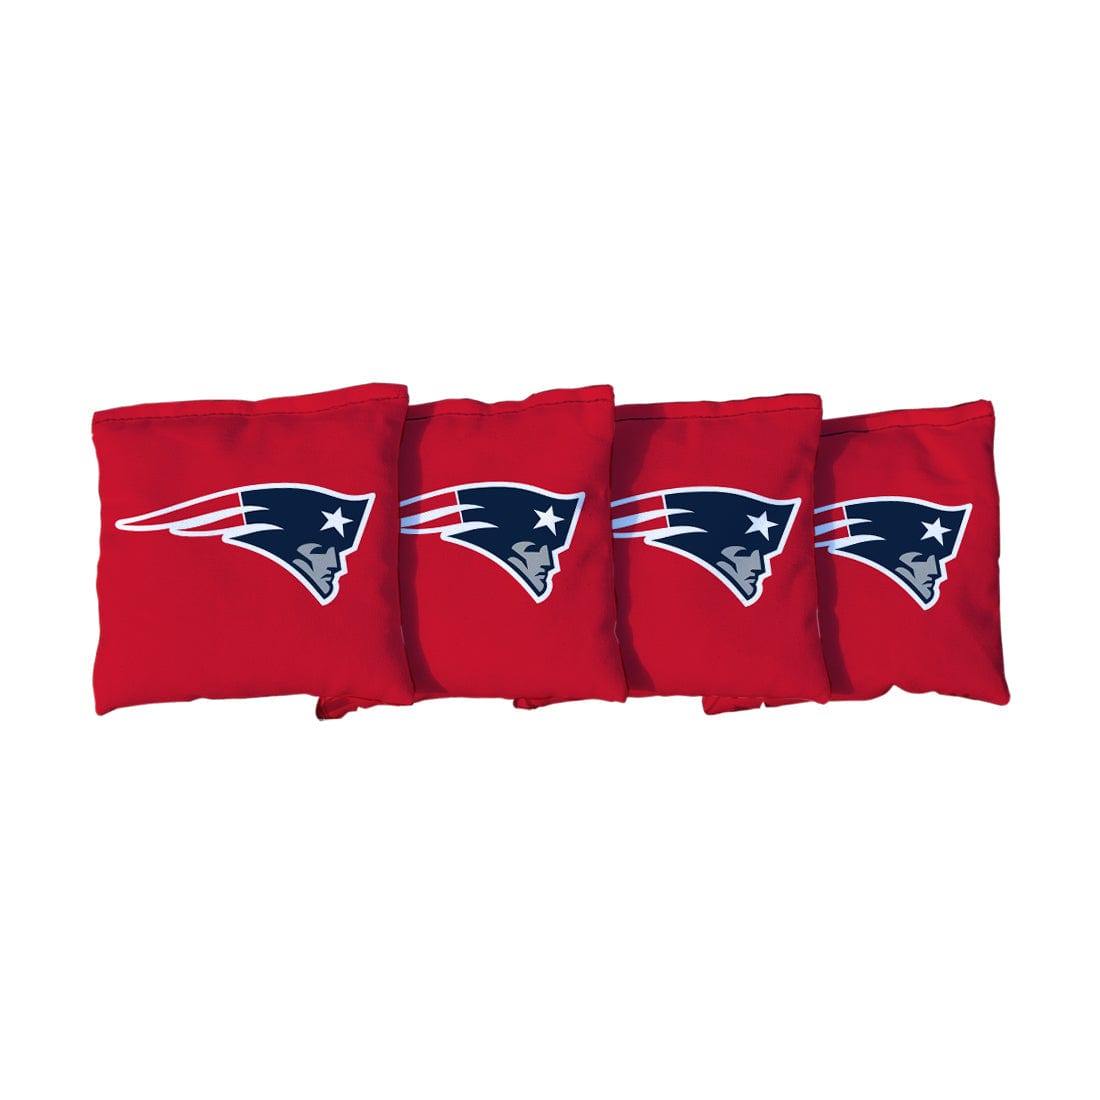 New England Patriots NFL Football Red Cornhole Bags